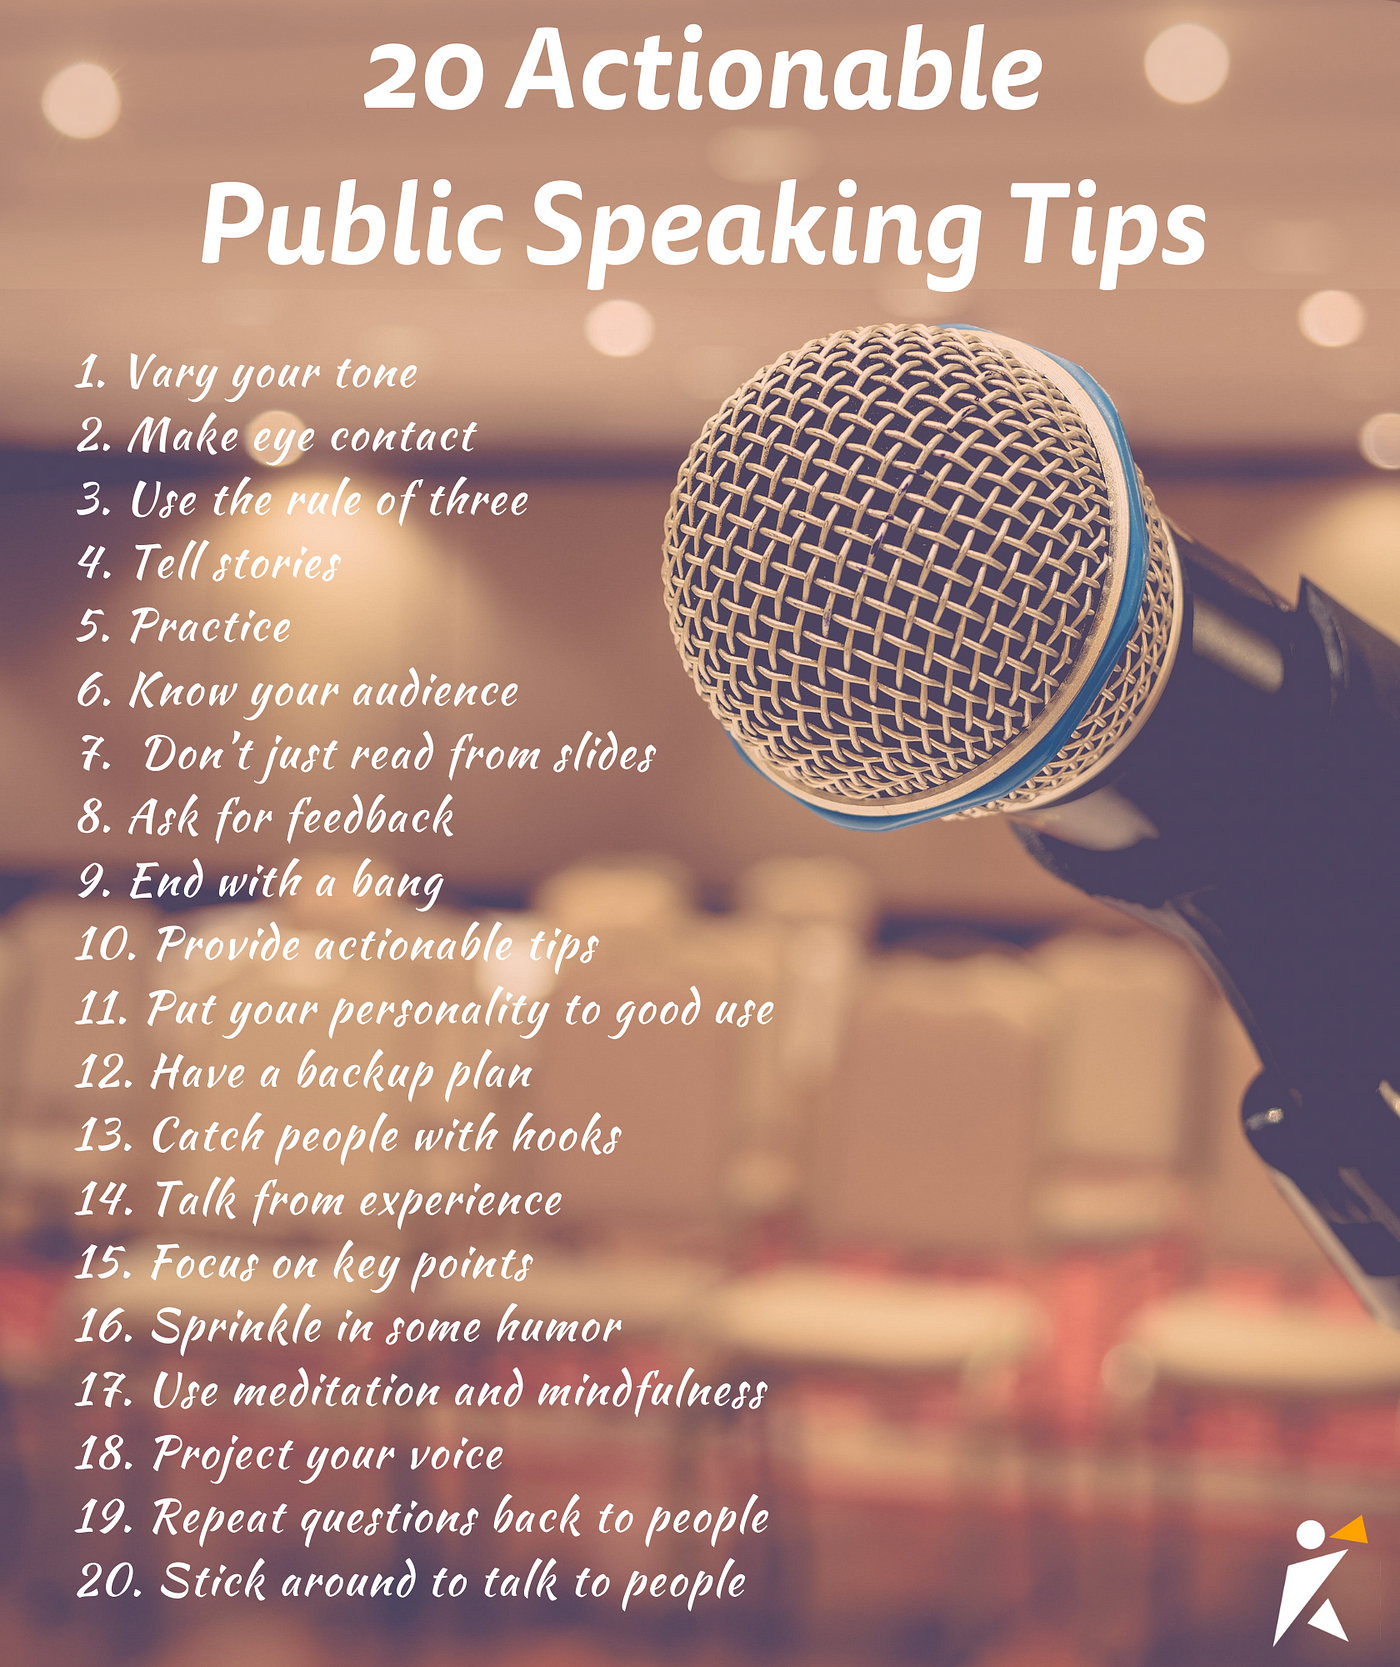 20 Actionable Public Speaking Tips That Work Like a Charm | by SpeakerHub |  Medium